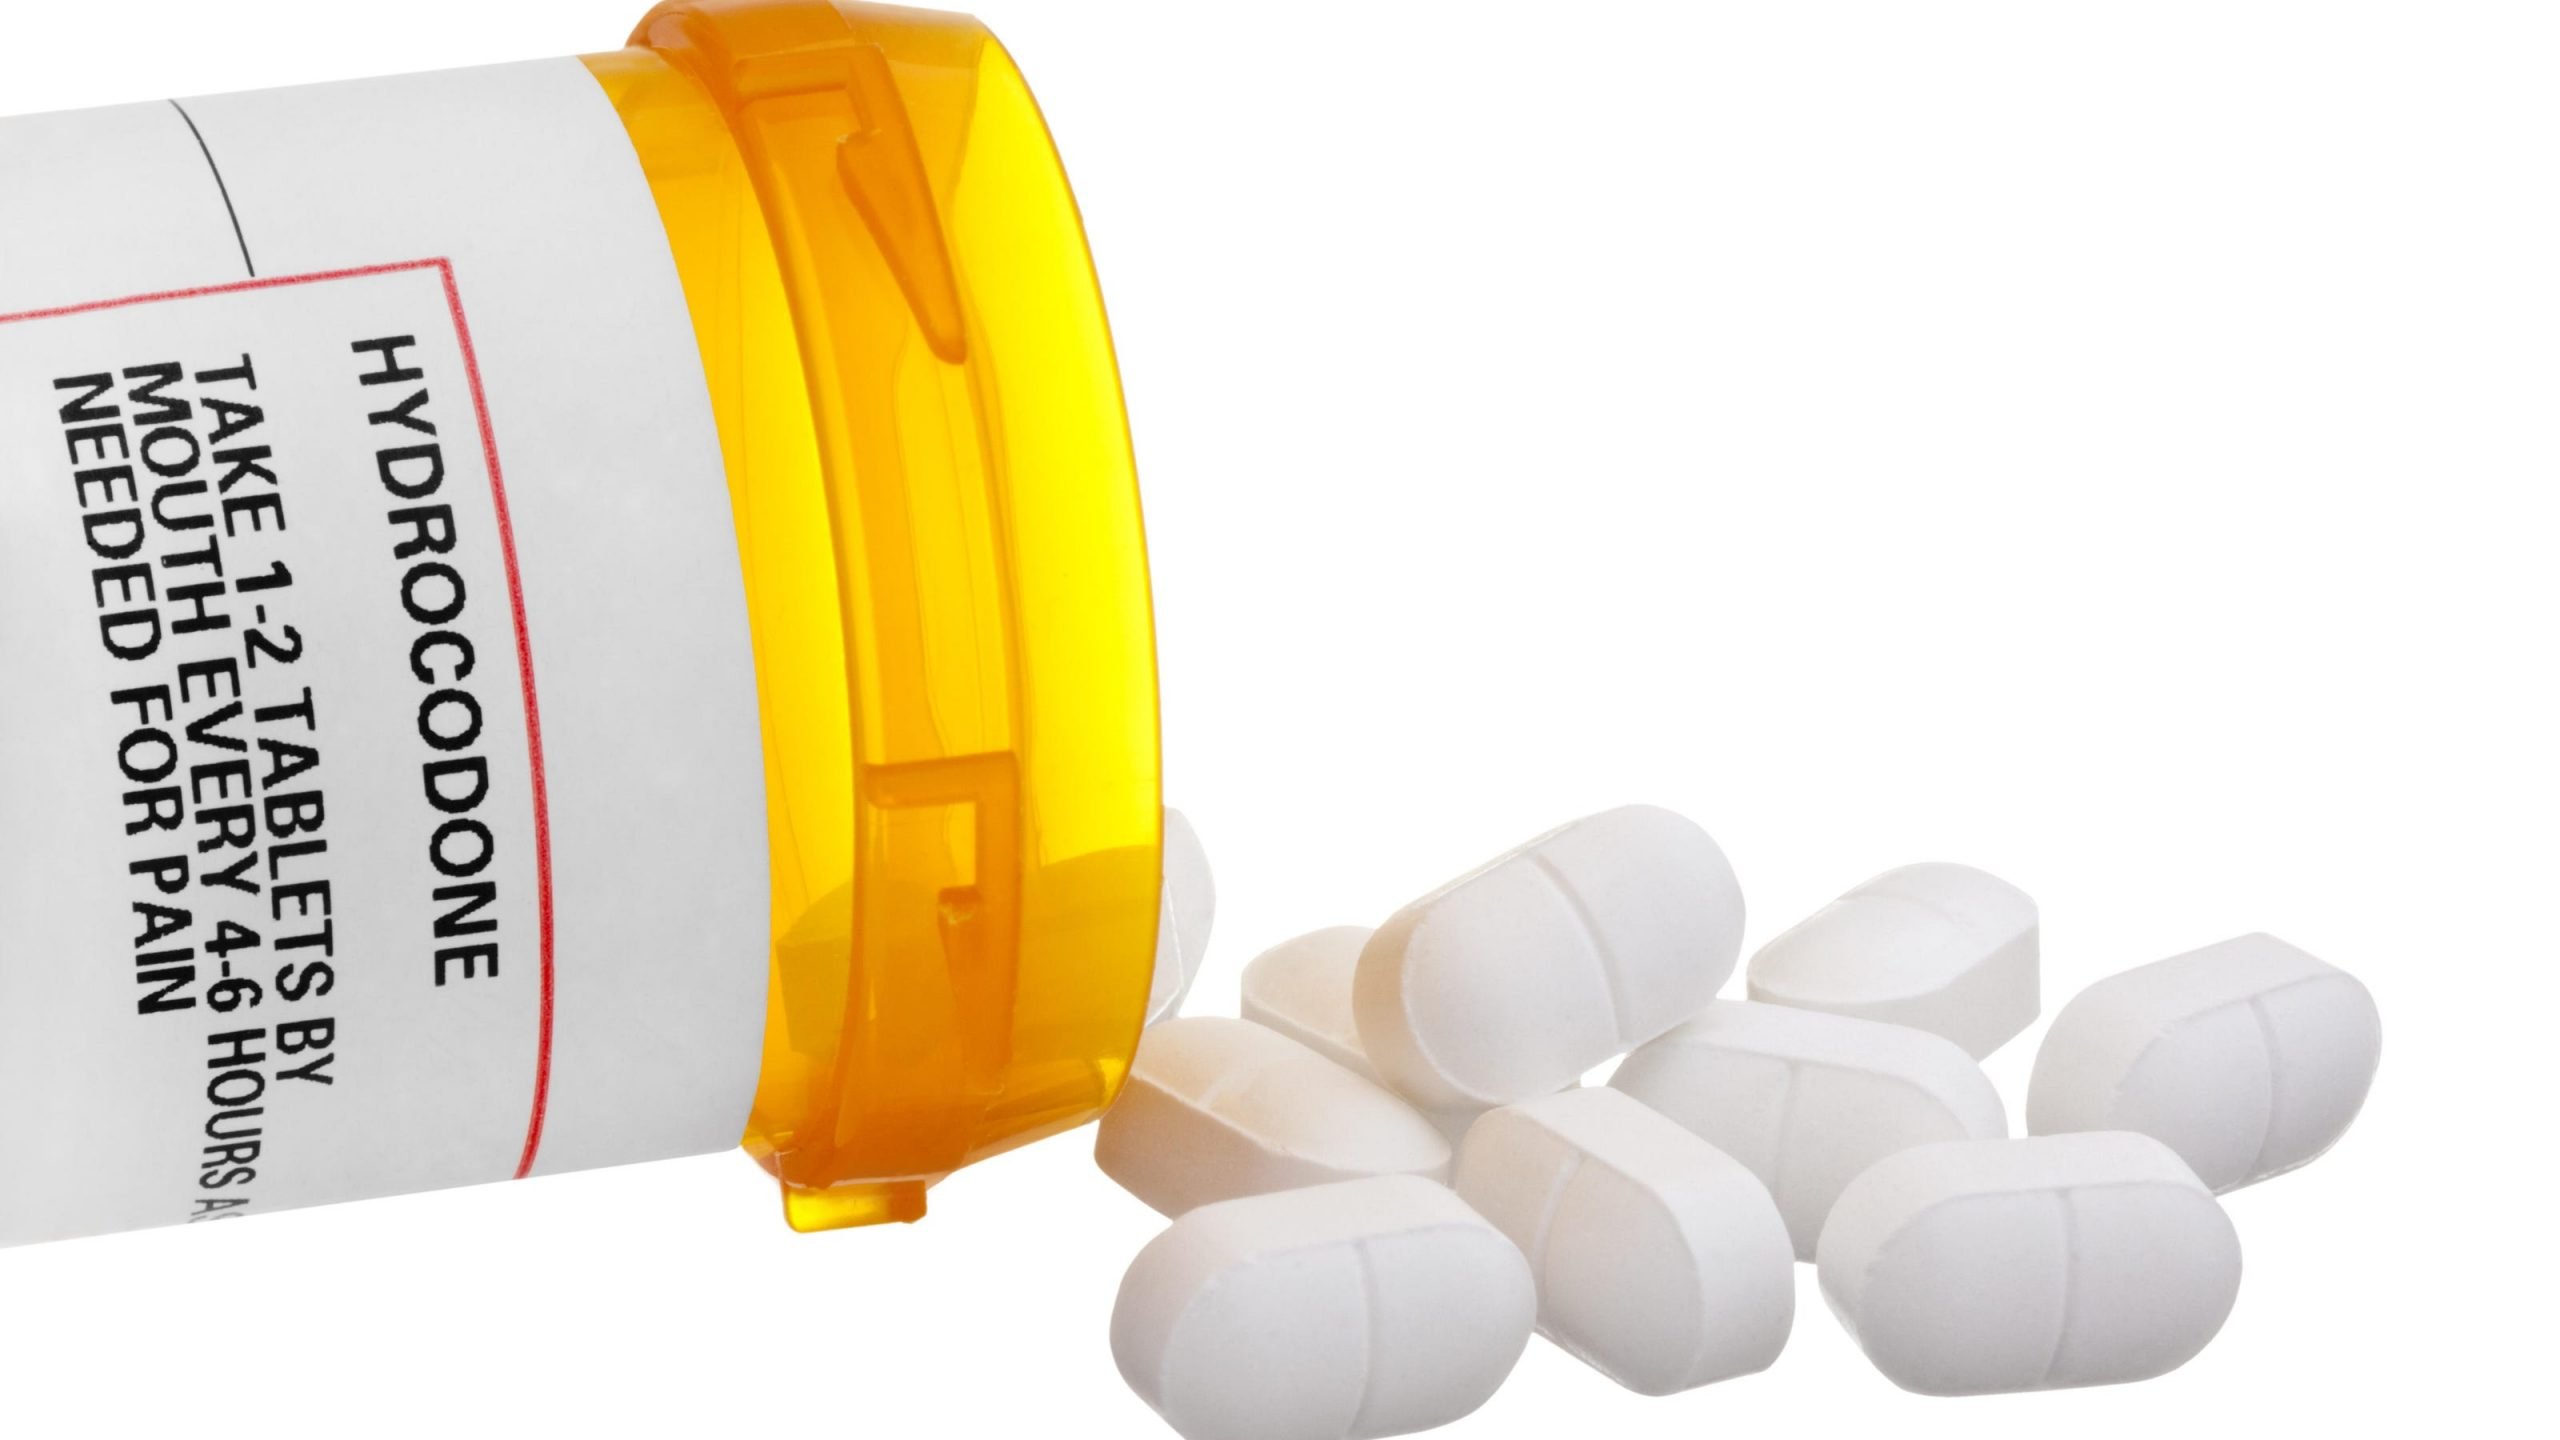 Get extra help with Medicare prescription drug plan costs